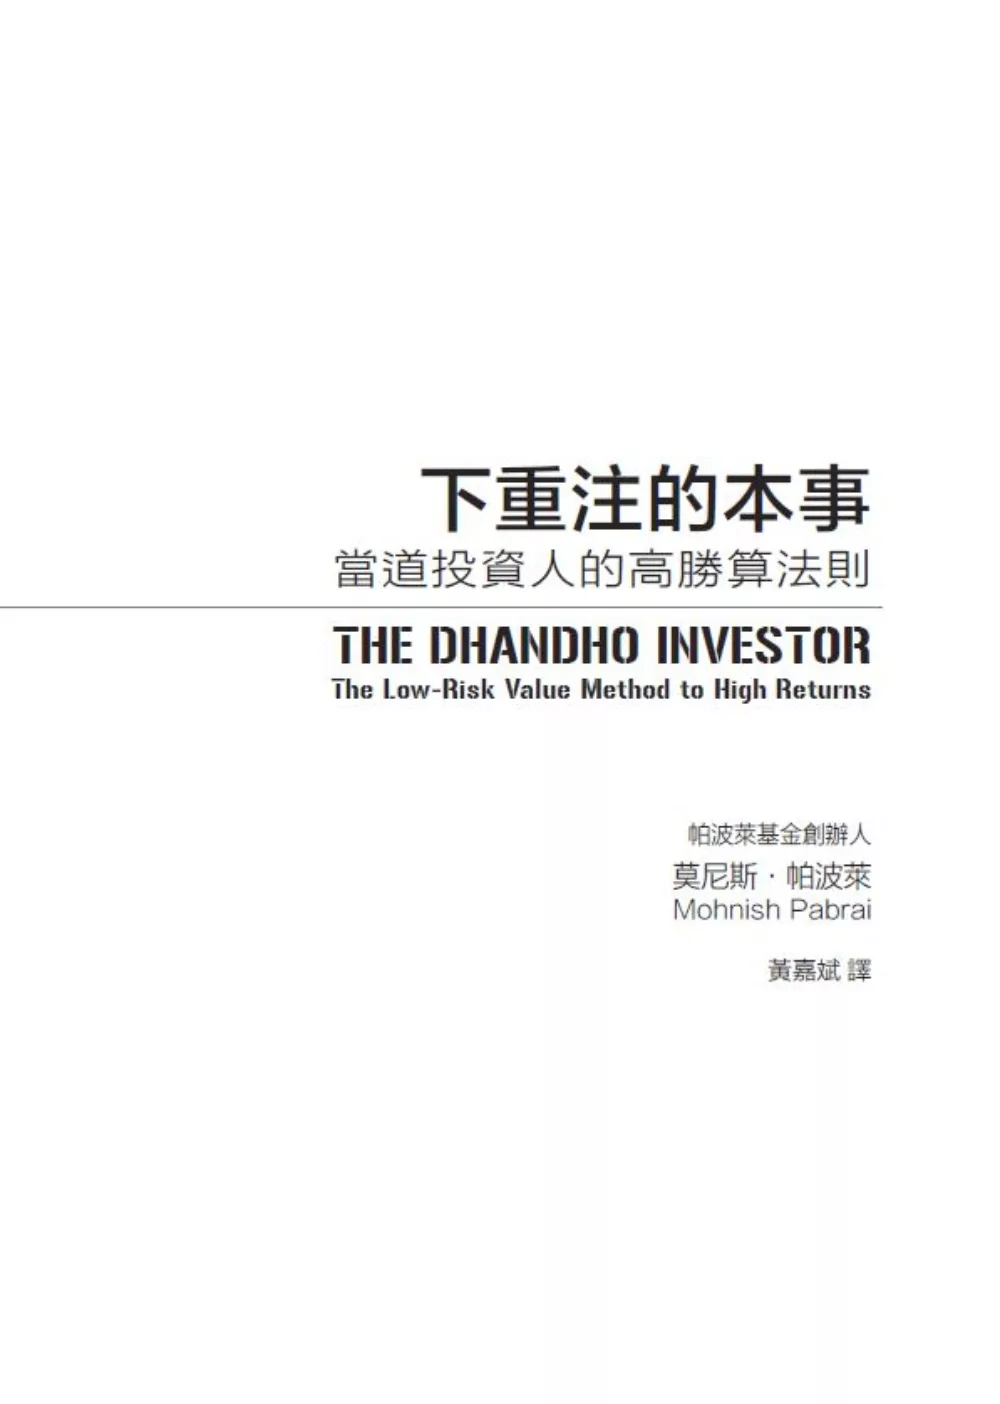 dhandho investor 翻譯